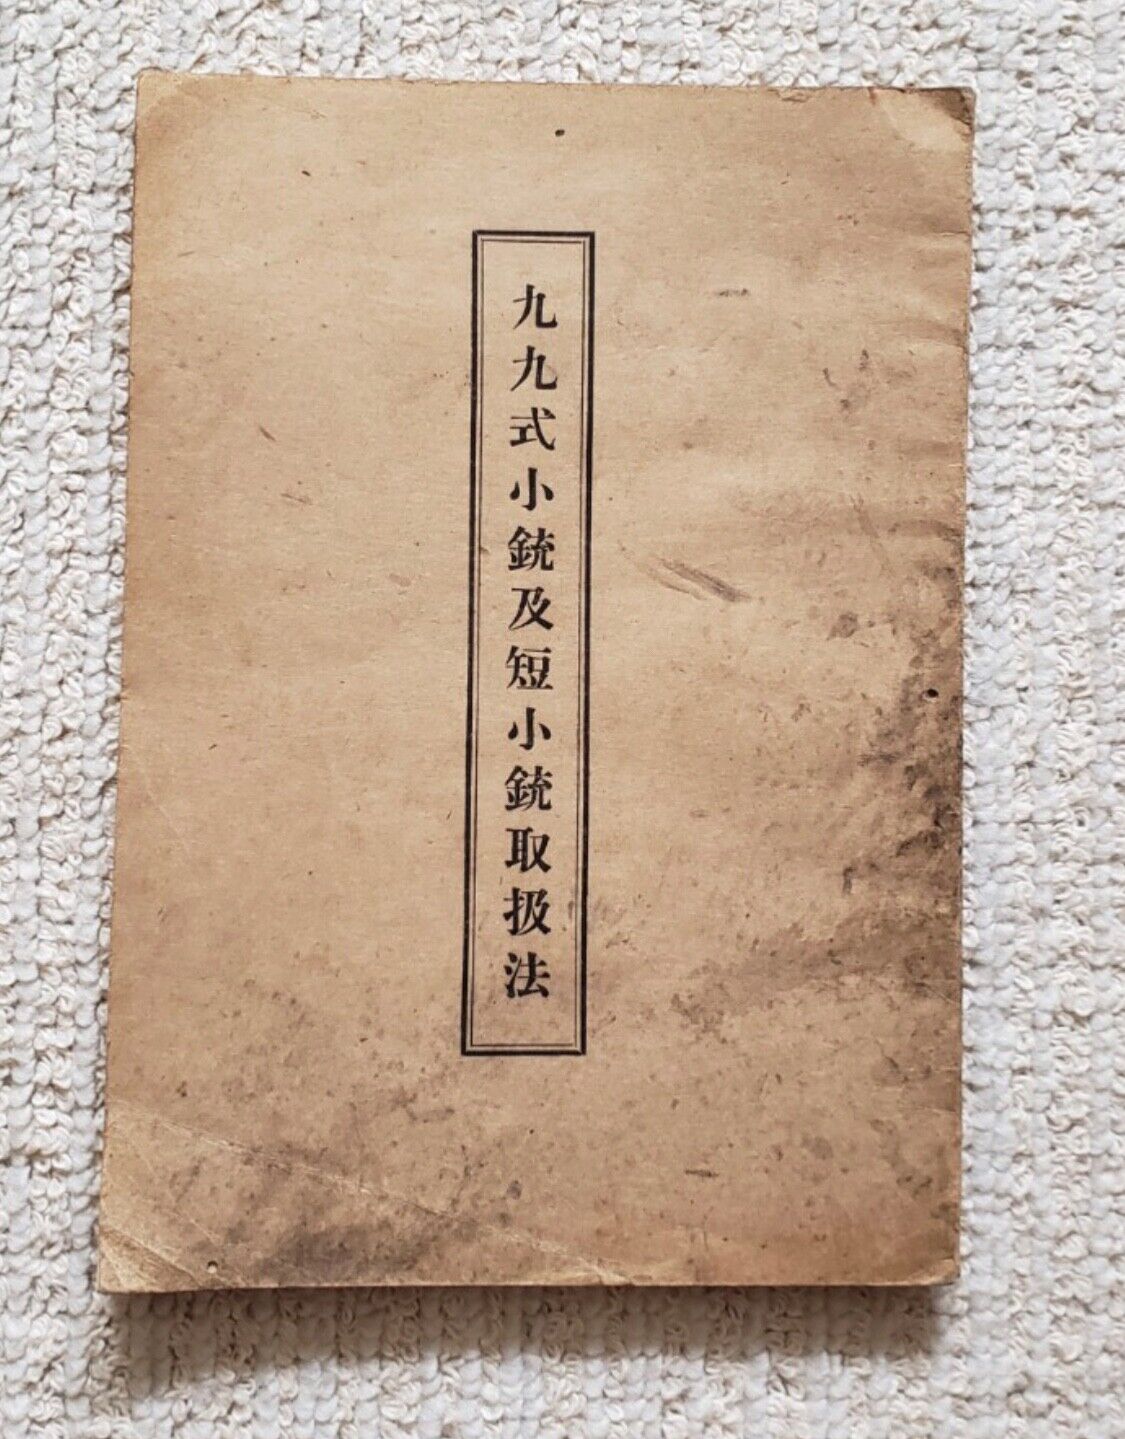 World War II Imperial Japanese Type 99 Arisaka Handbook, 1943 - Rare Document